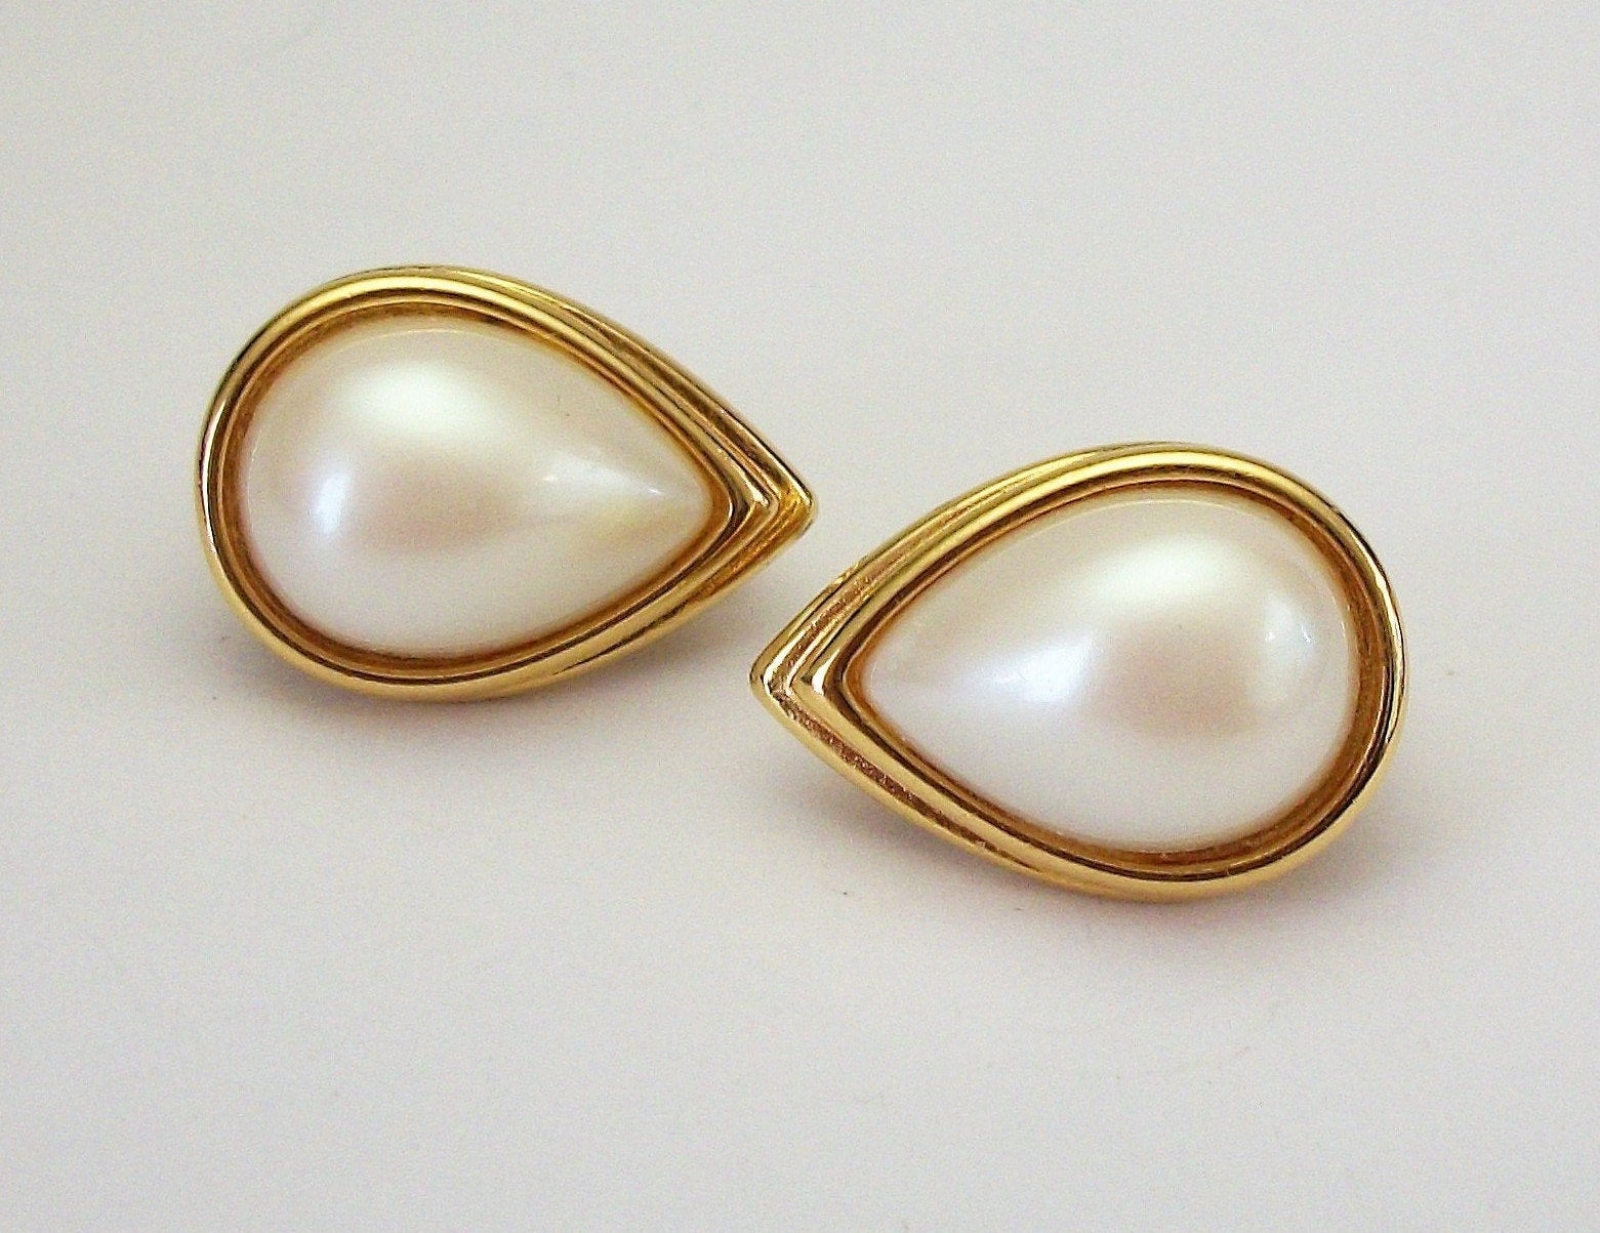 Details more than 75 monet pearl earrings best - esthdonghoadian